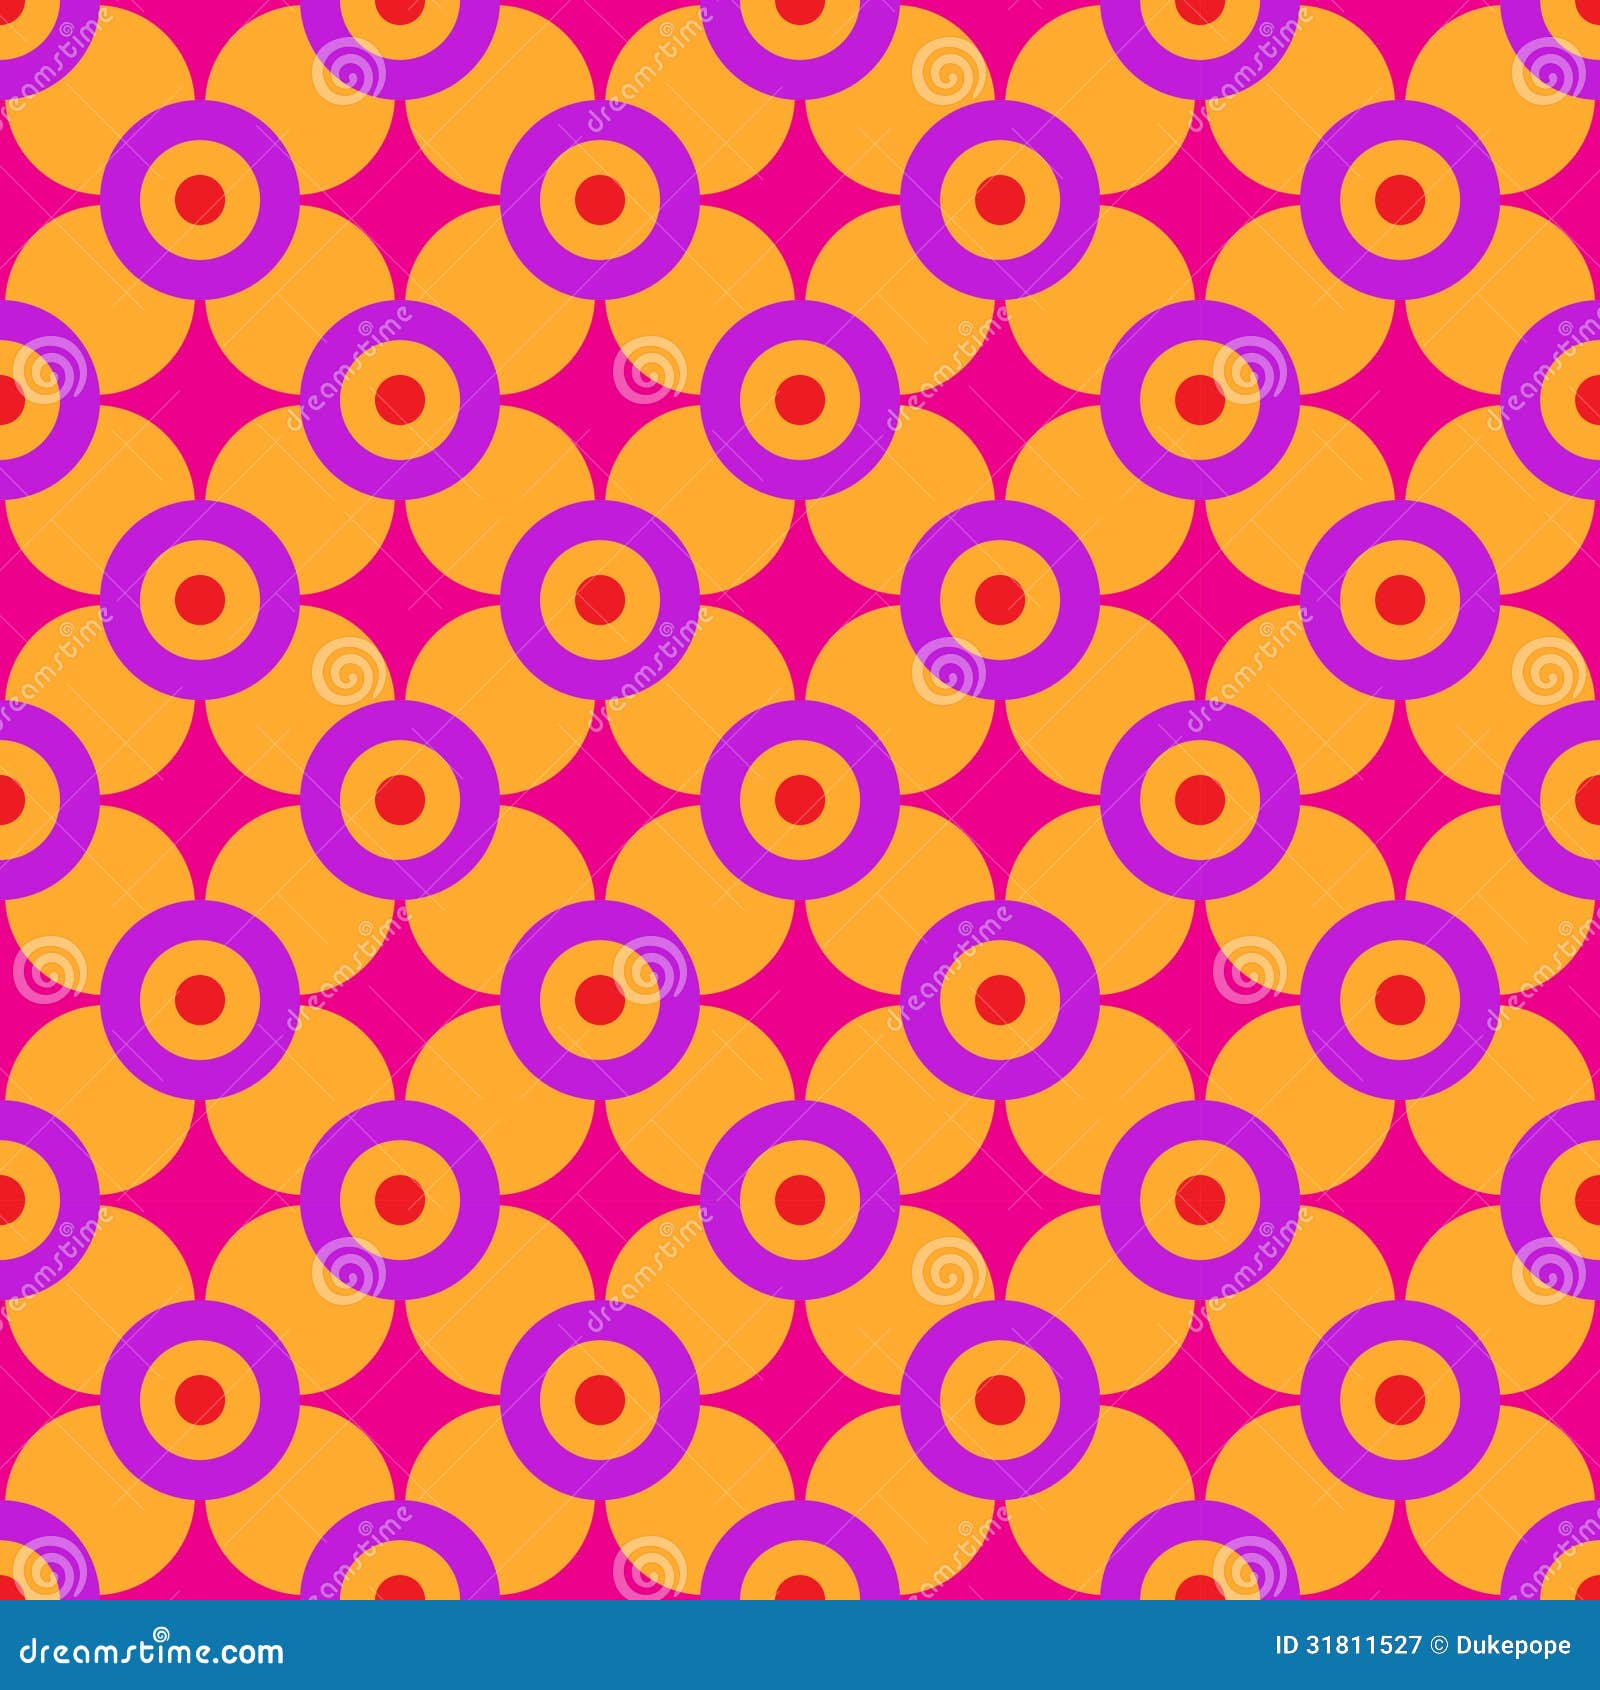 sixties geometric pattern